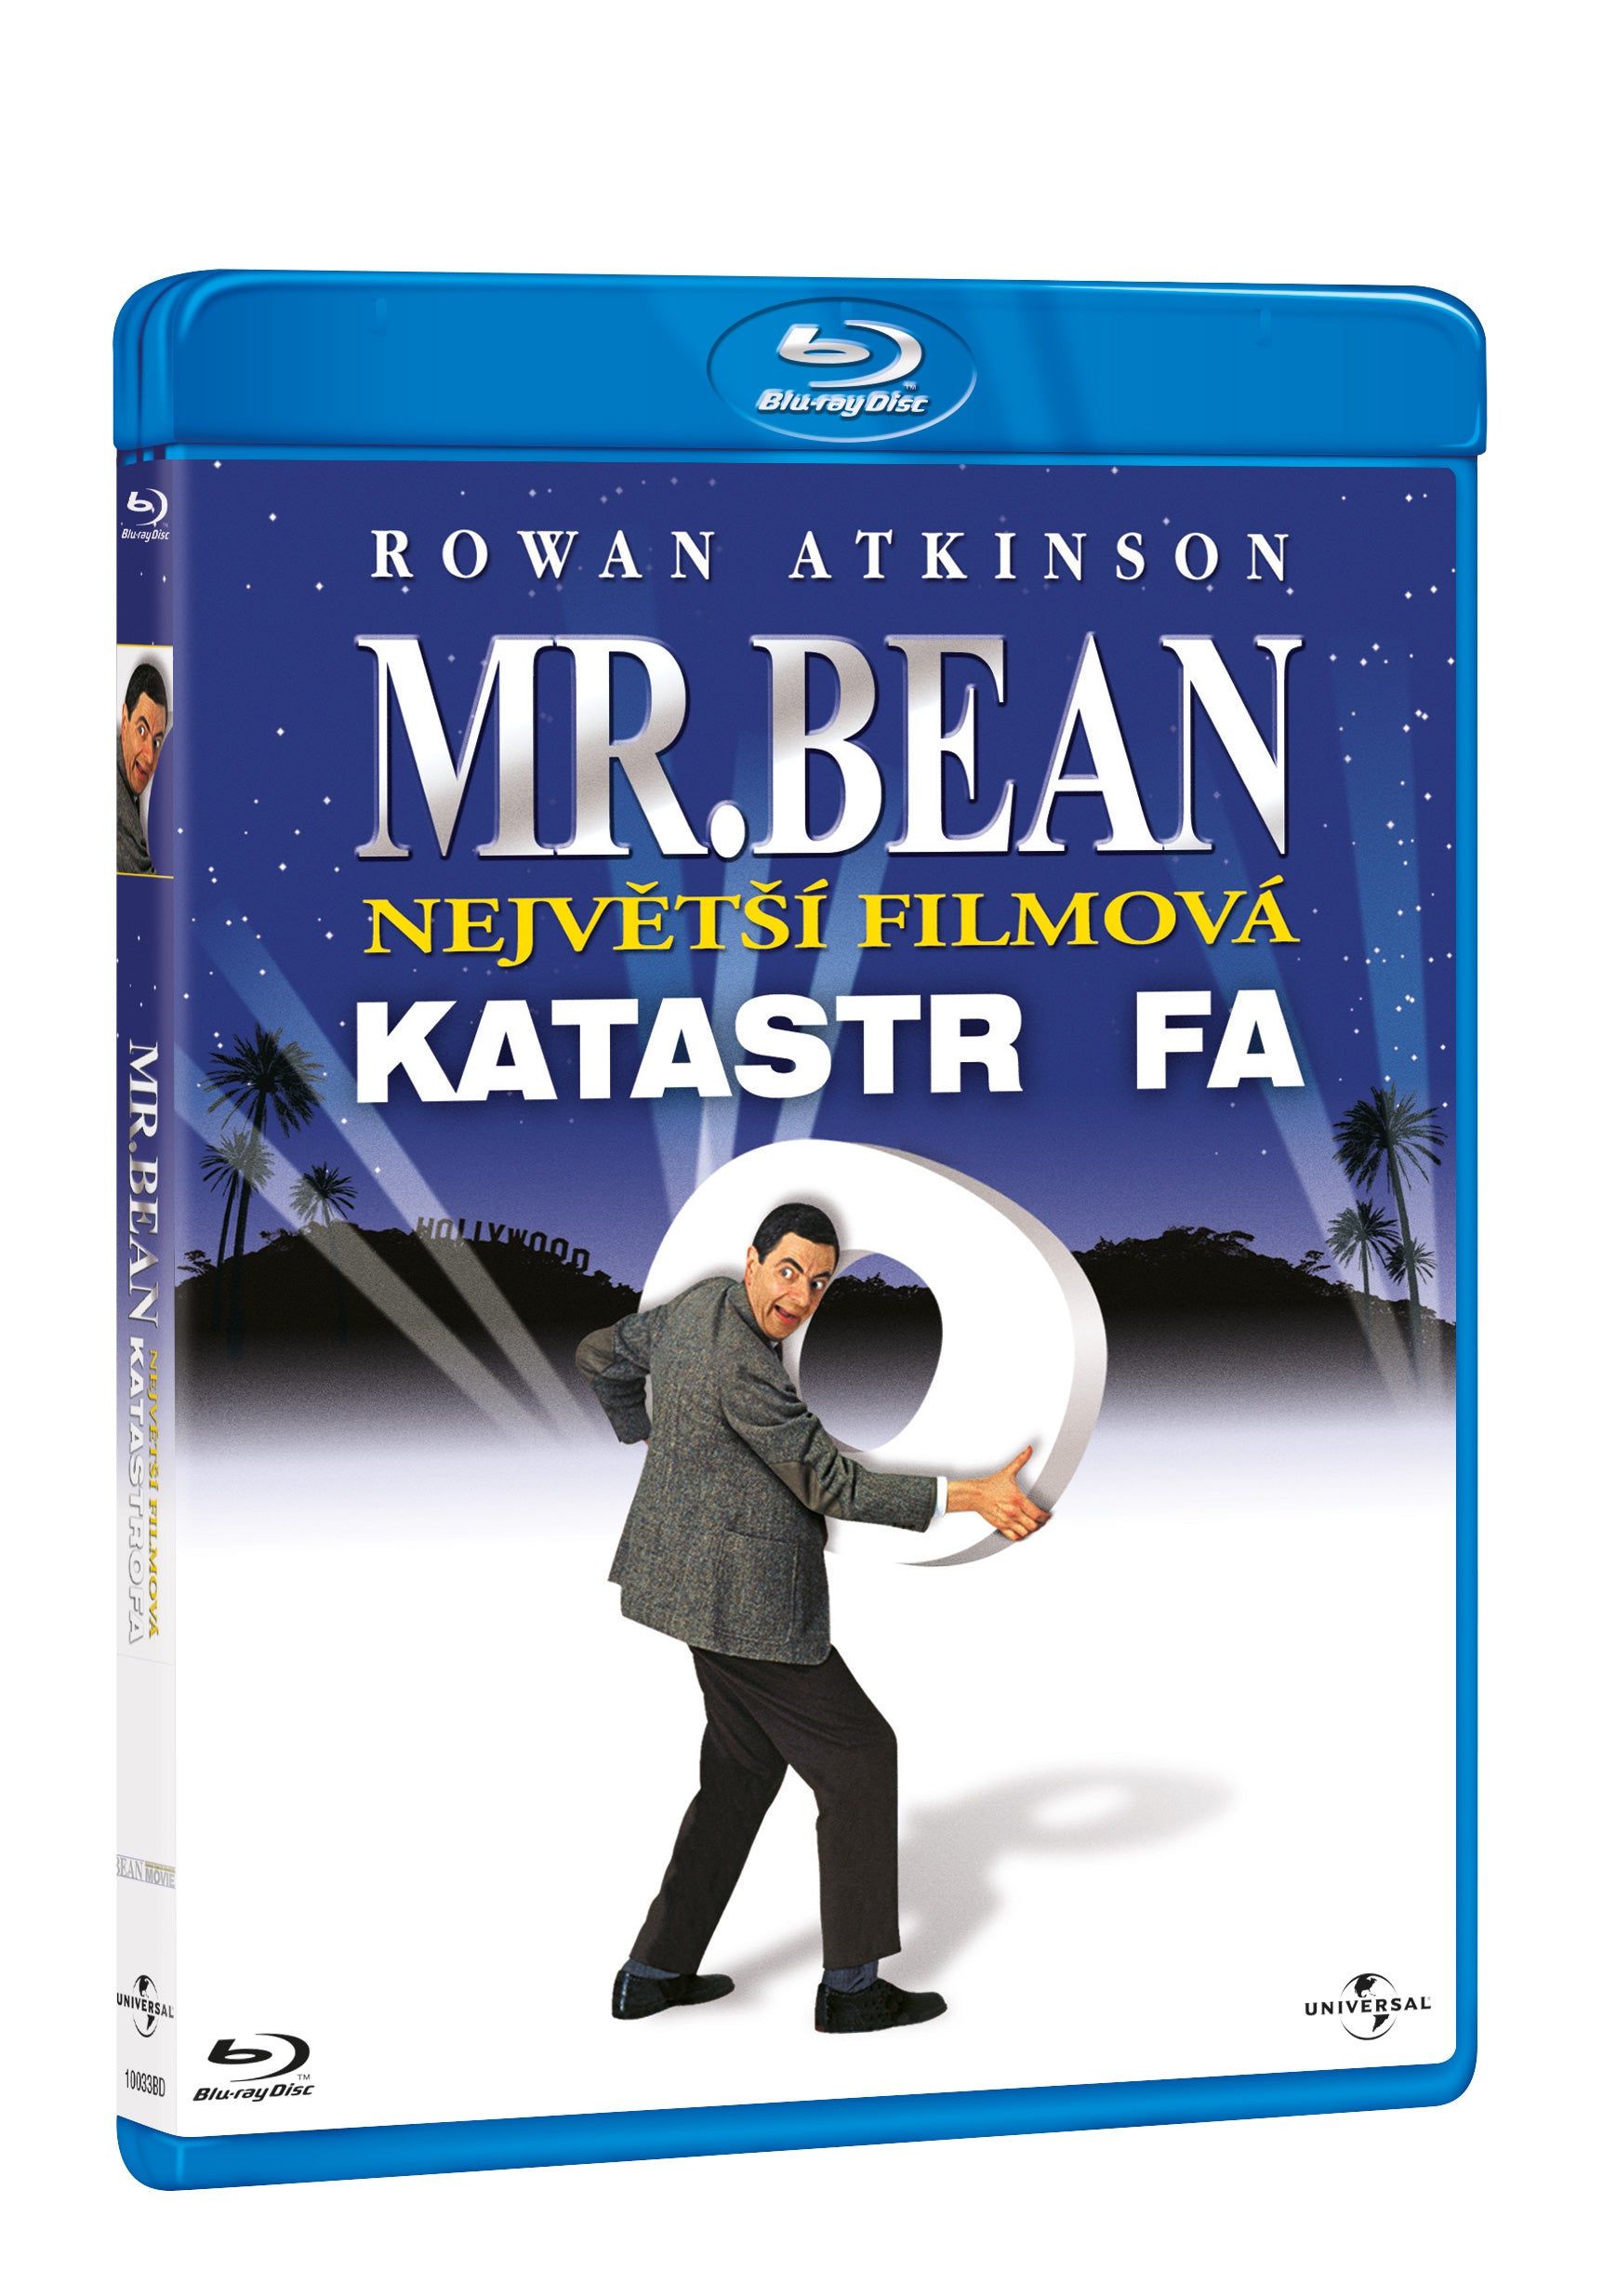 Mr. Bean: Nejvetsi filmova katastrofa BD / Bean - Czech version